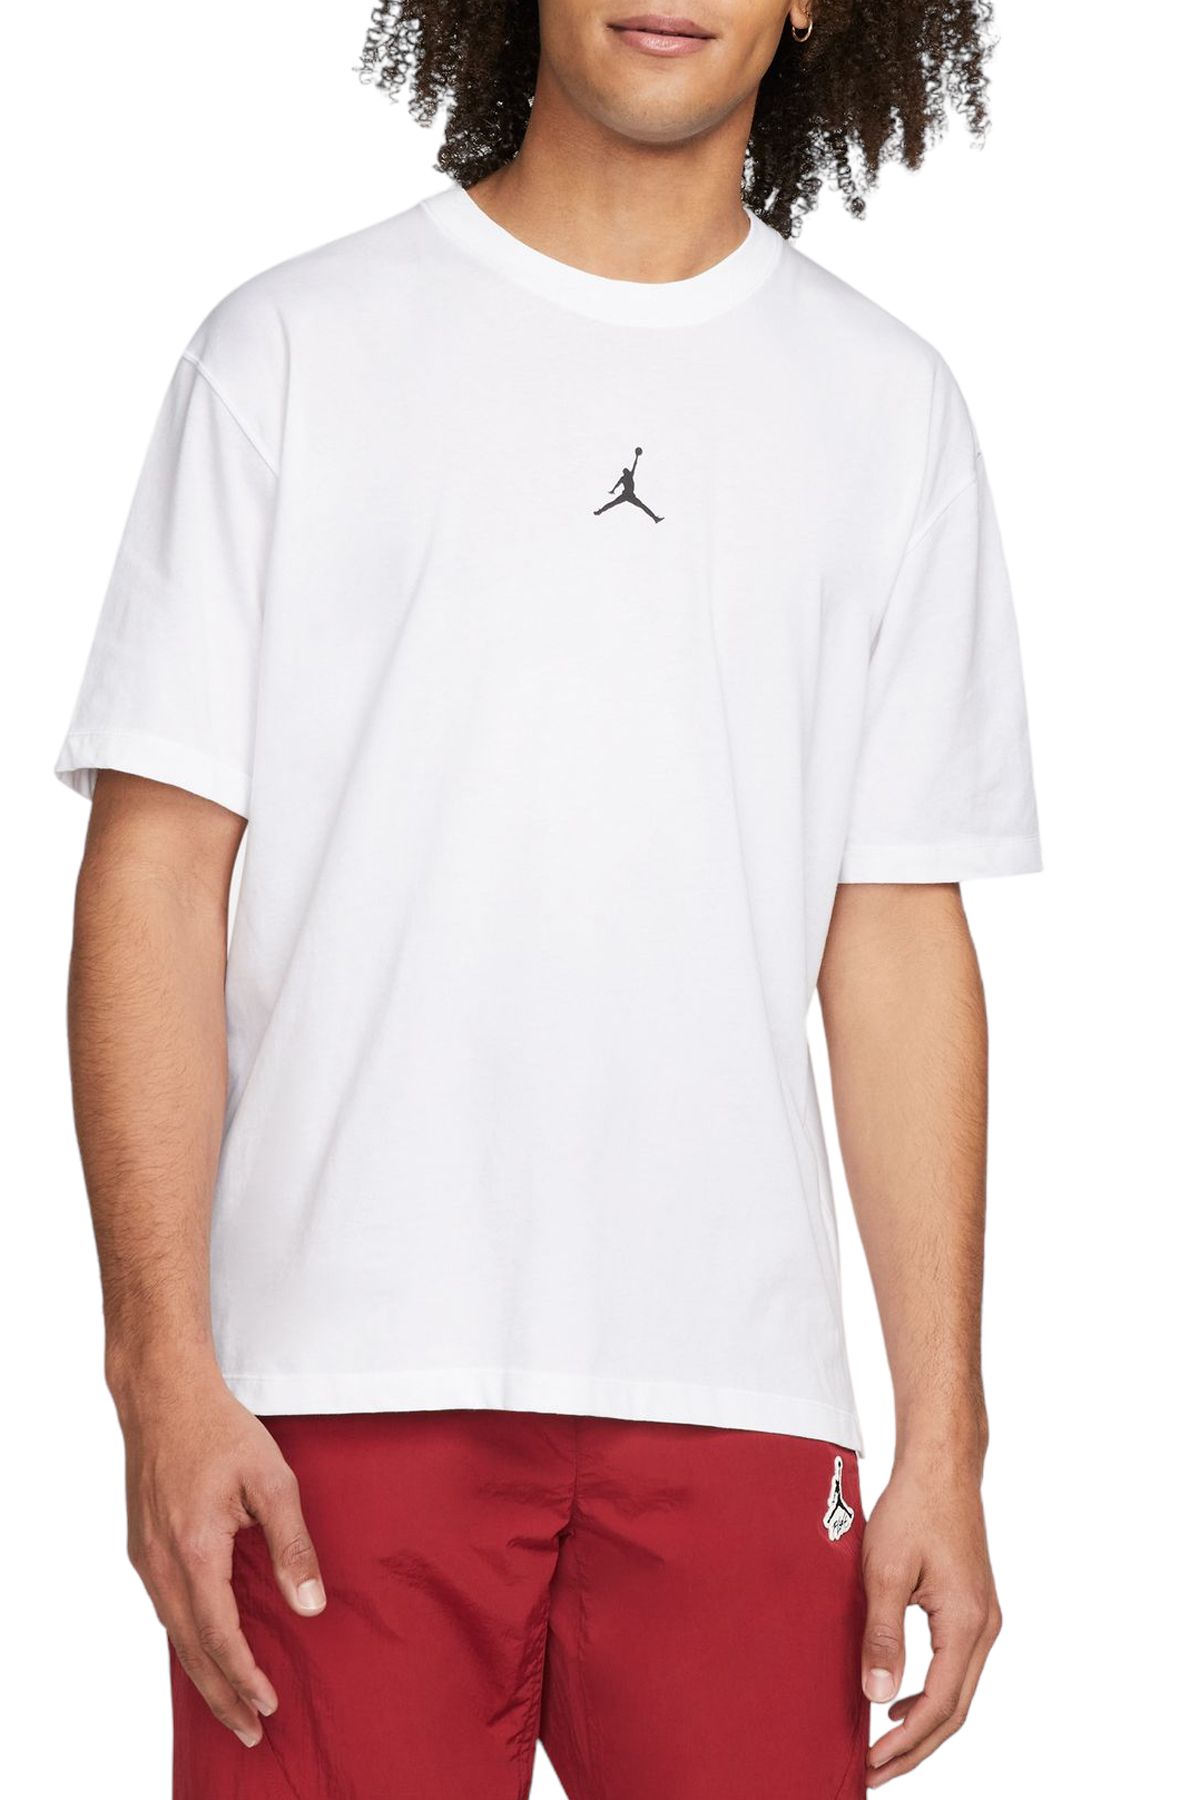 NIKE Air Jordan Boys Jumpman 23 Dri-Fit T-Shirt (Large, White)